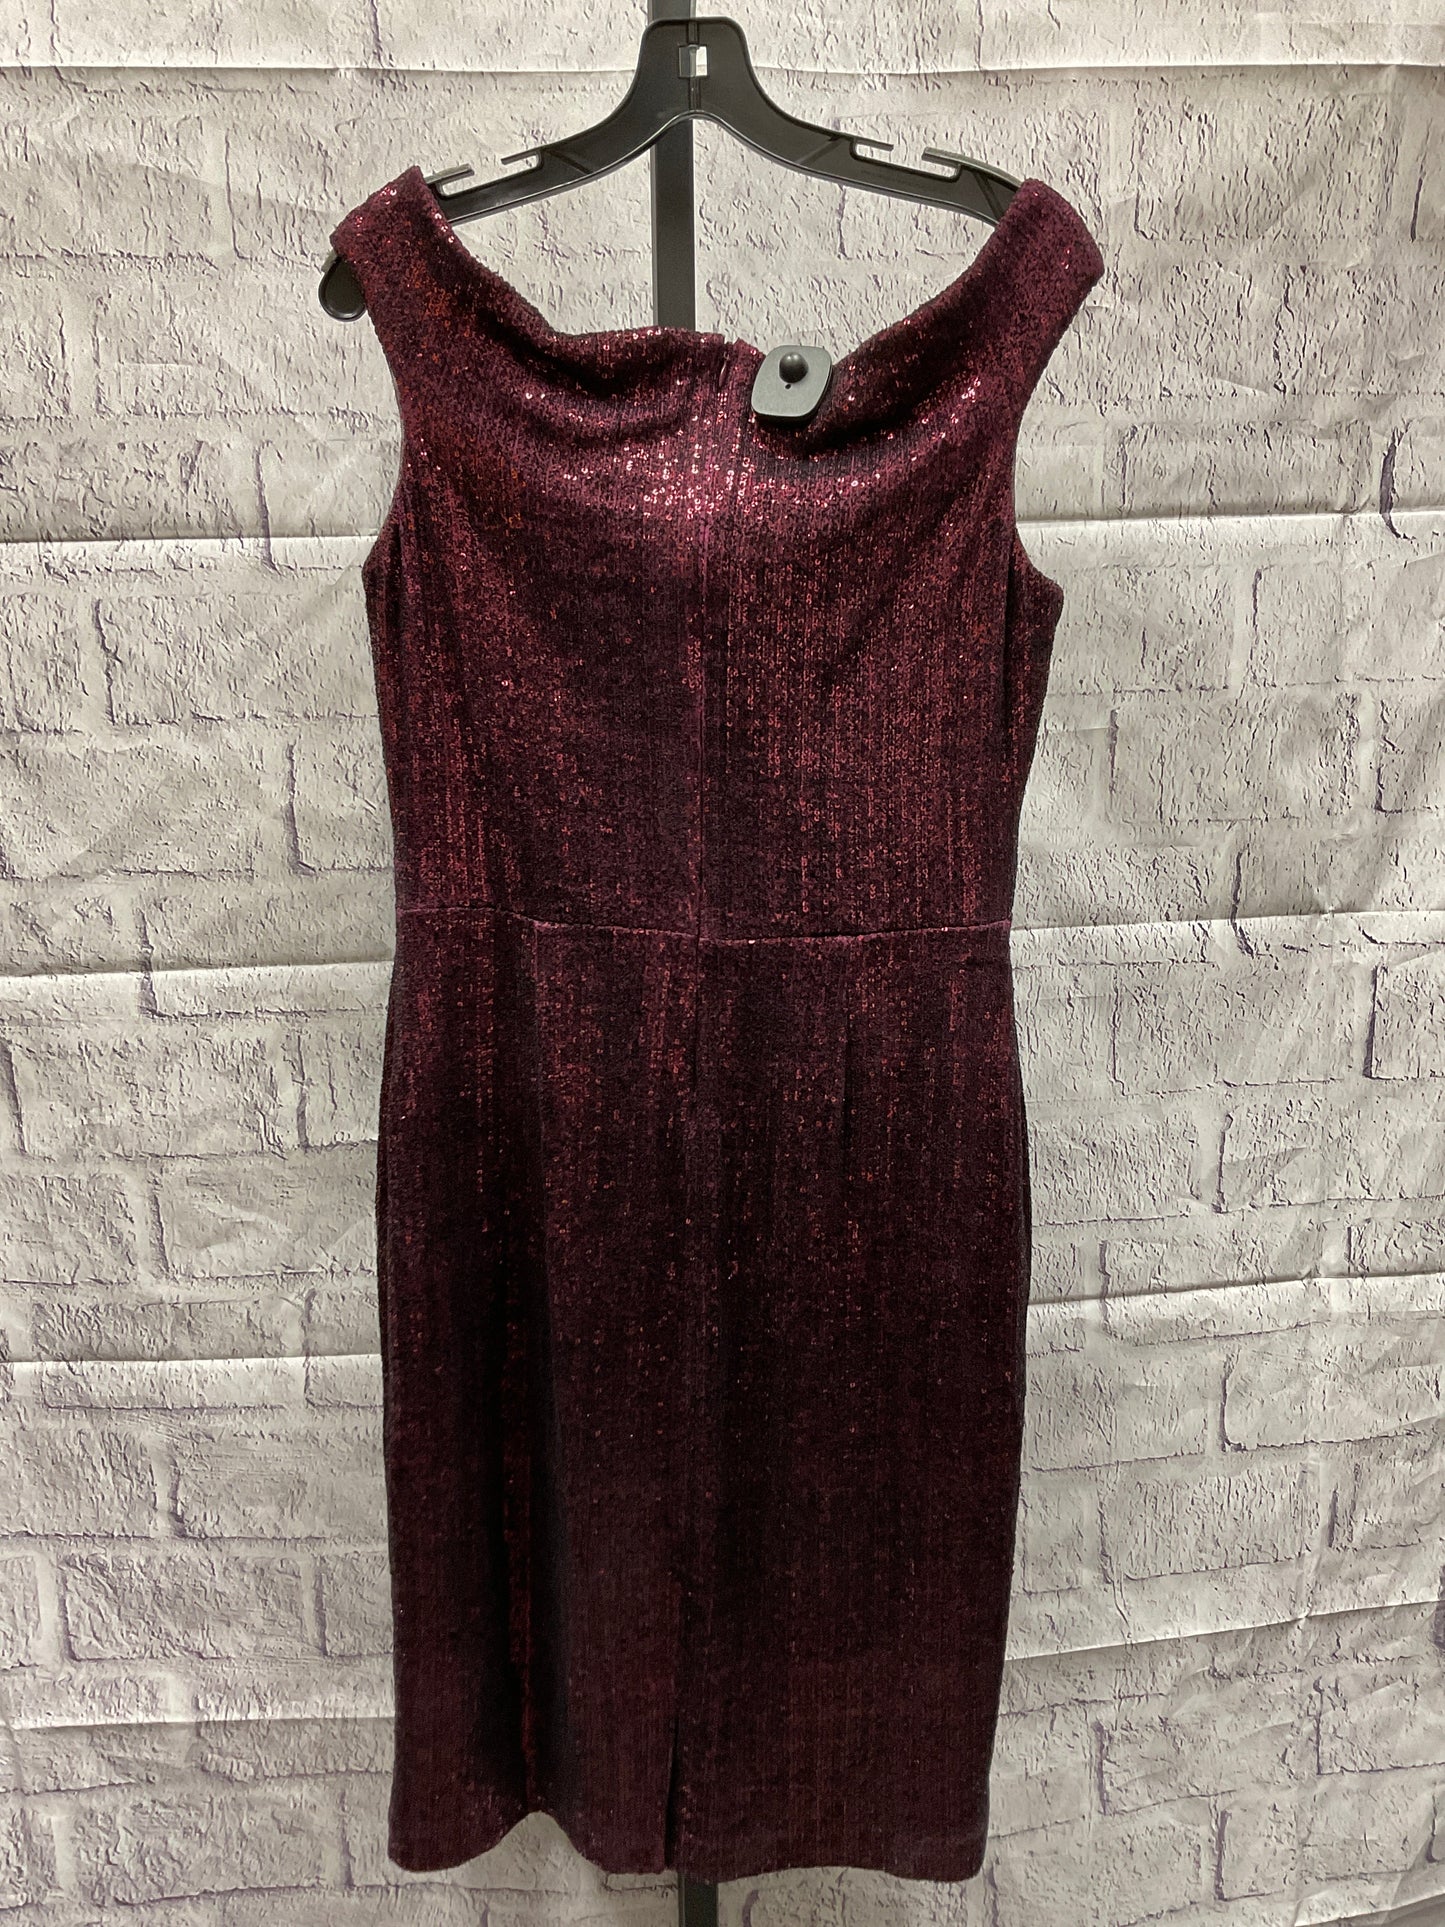 Dress Party Midi By Lauren By Ralph Lauren  Size: 10